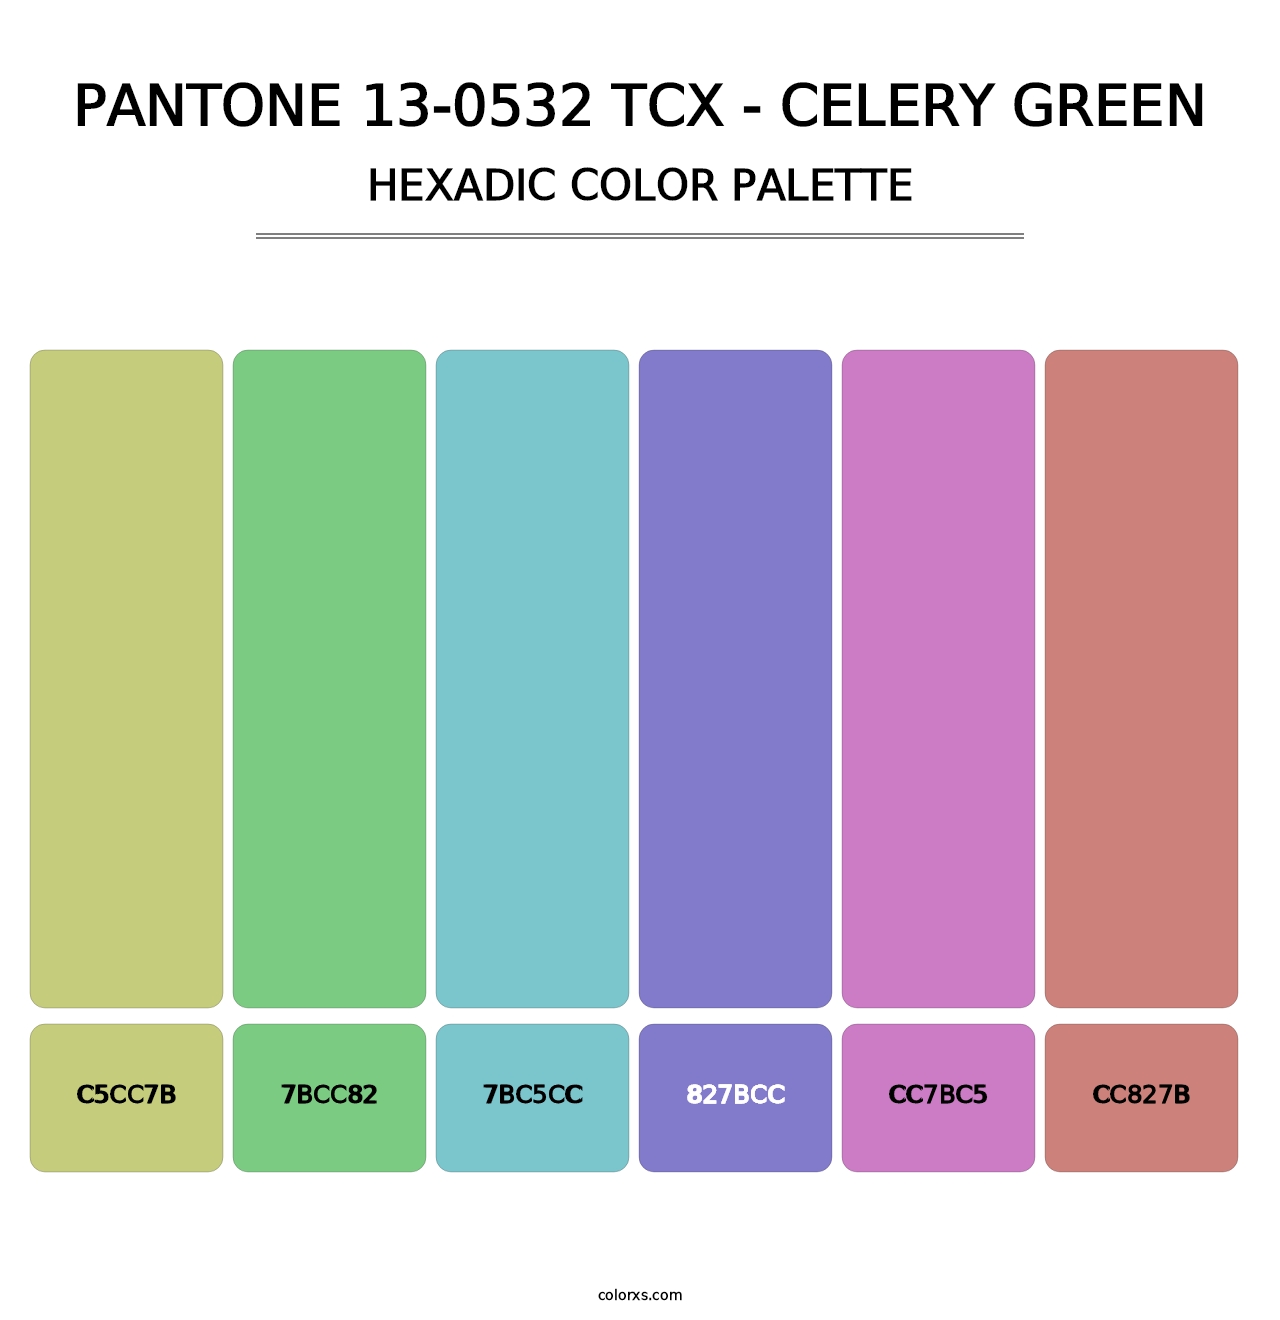 PANTONE 13-0532 TCX - Celery Green - Hexadic Color Palette